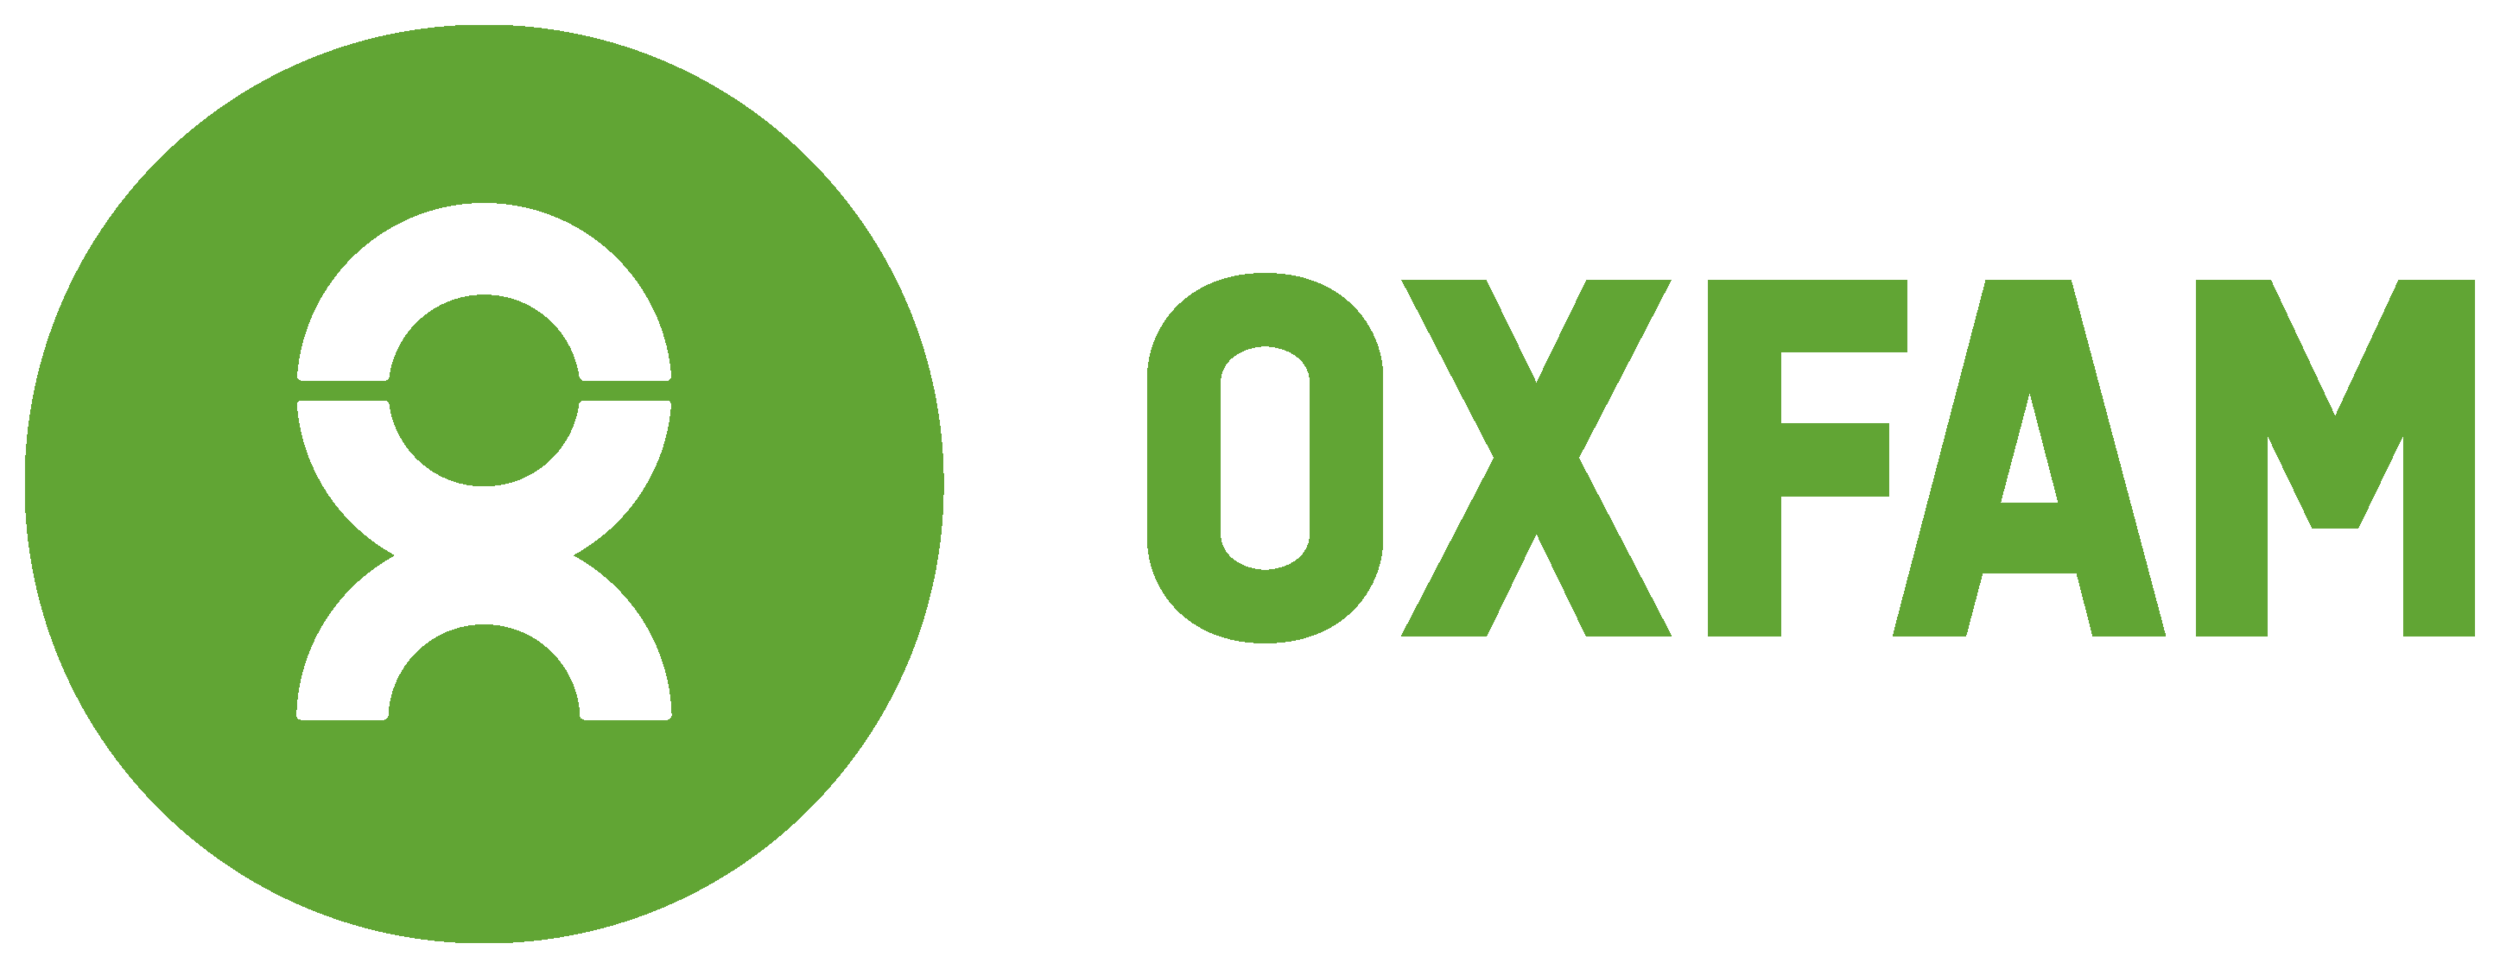 oxfam_logo.png